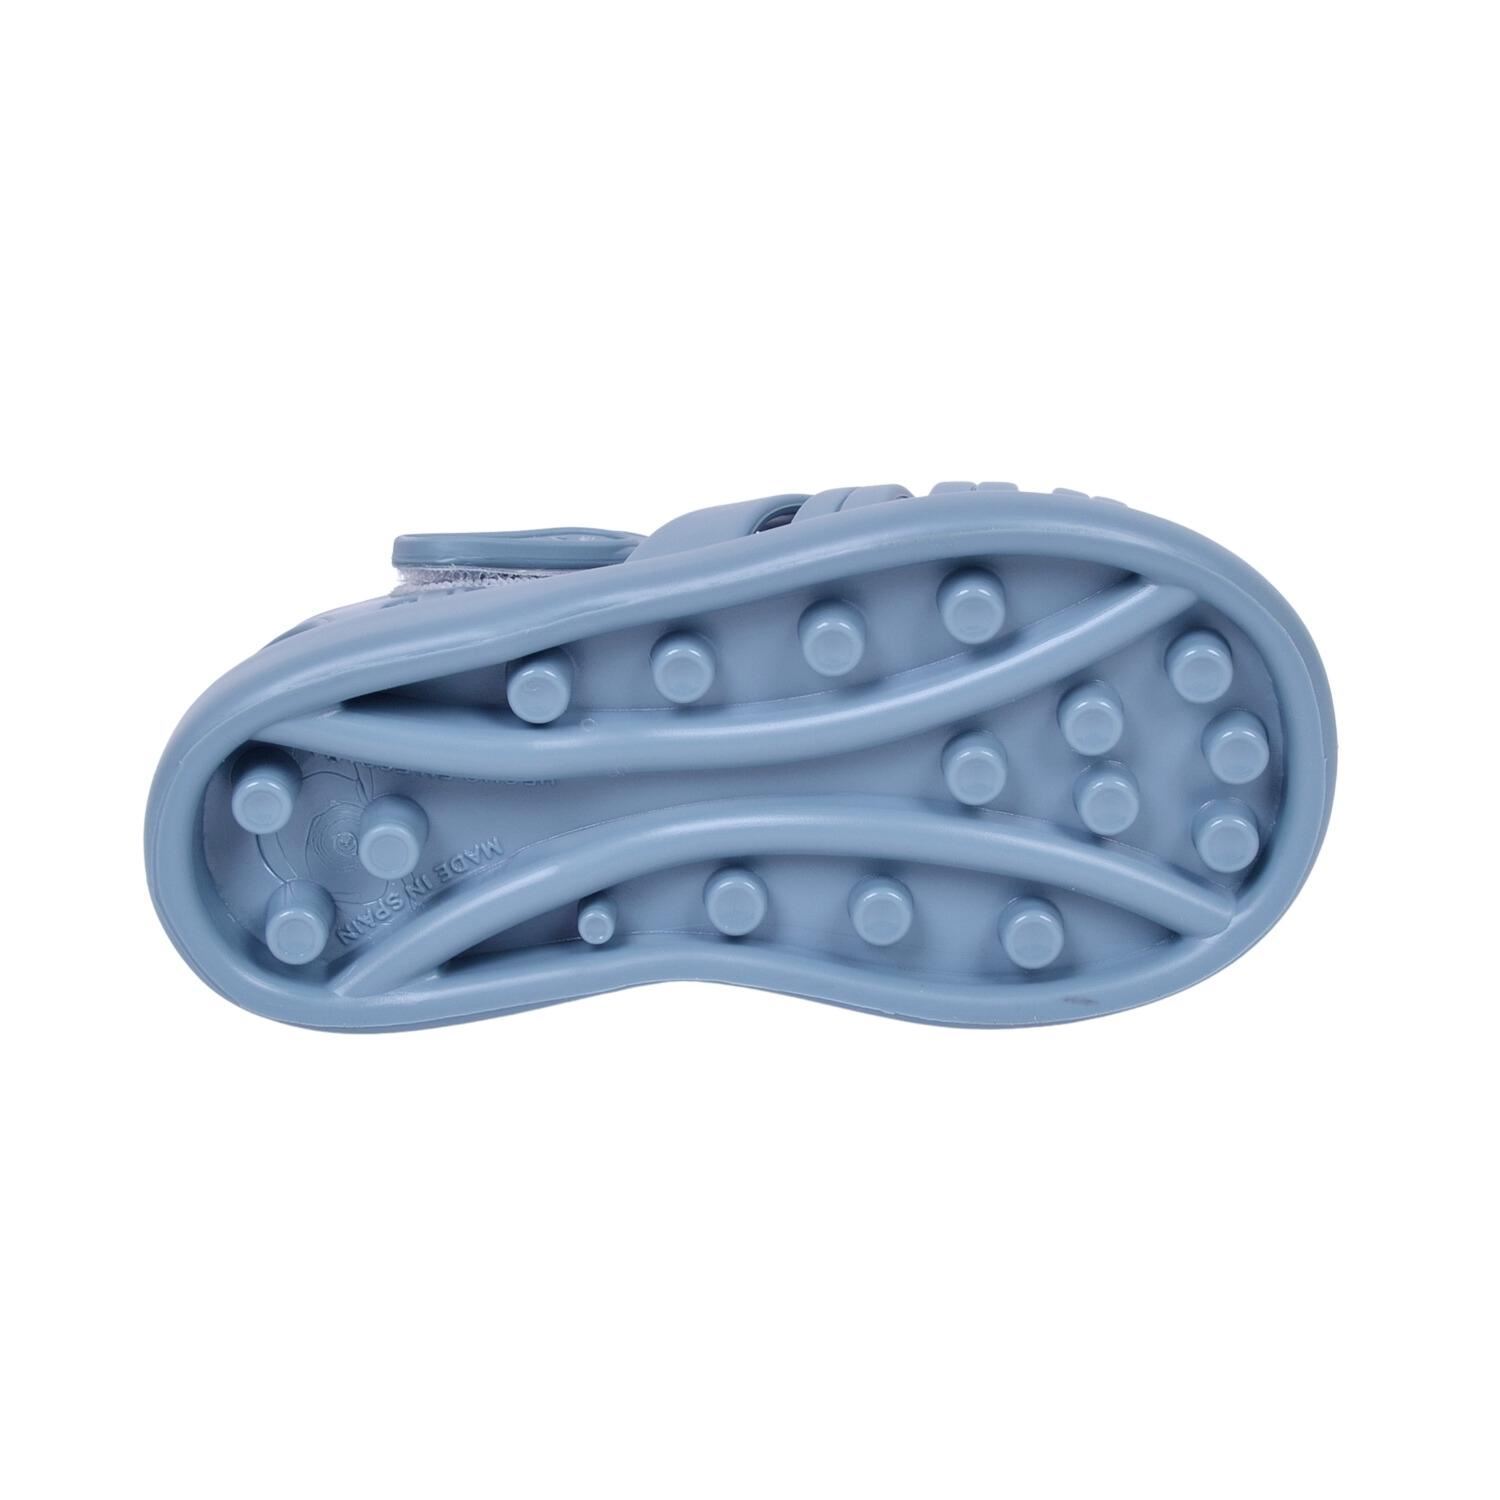 Igor S10271 Tobby Solid Ocean Çocuk Sandalet